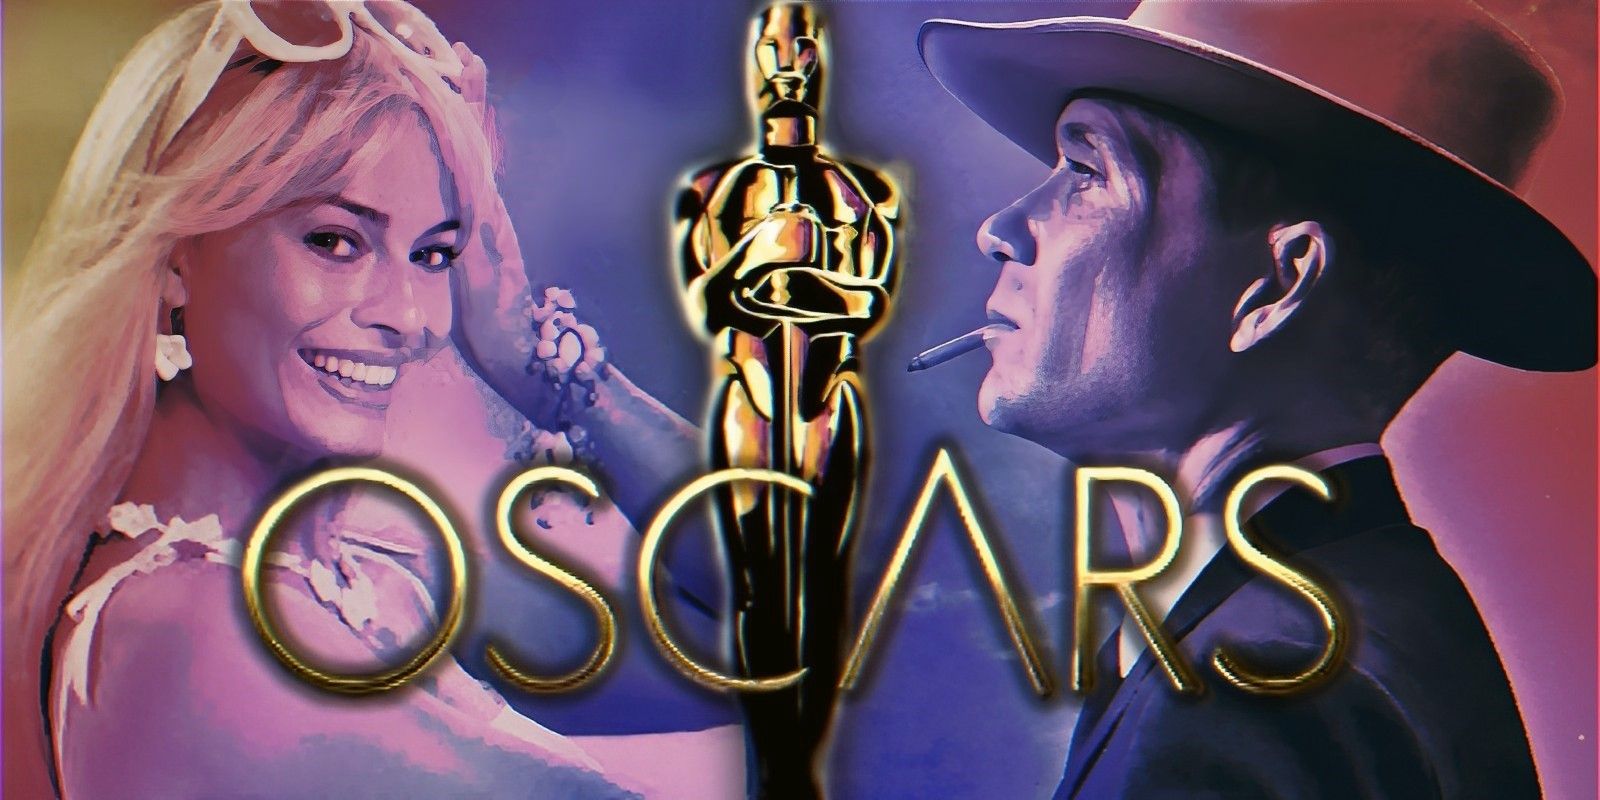 Margot Robbie’s Barbie smiling and Cillian Murphy’s Oppenheimer side profile alongside Oscars logo.